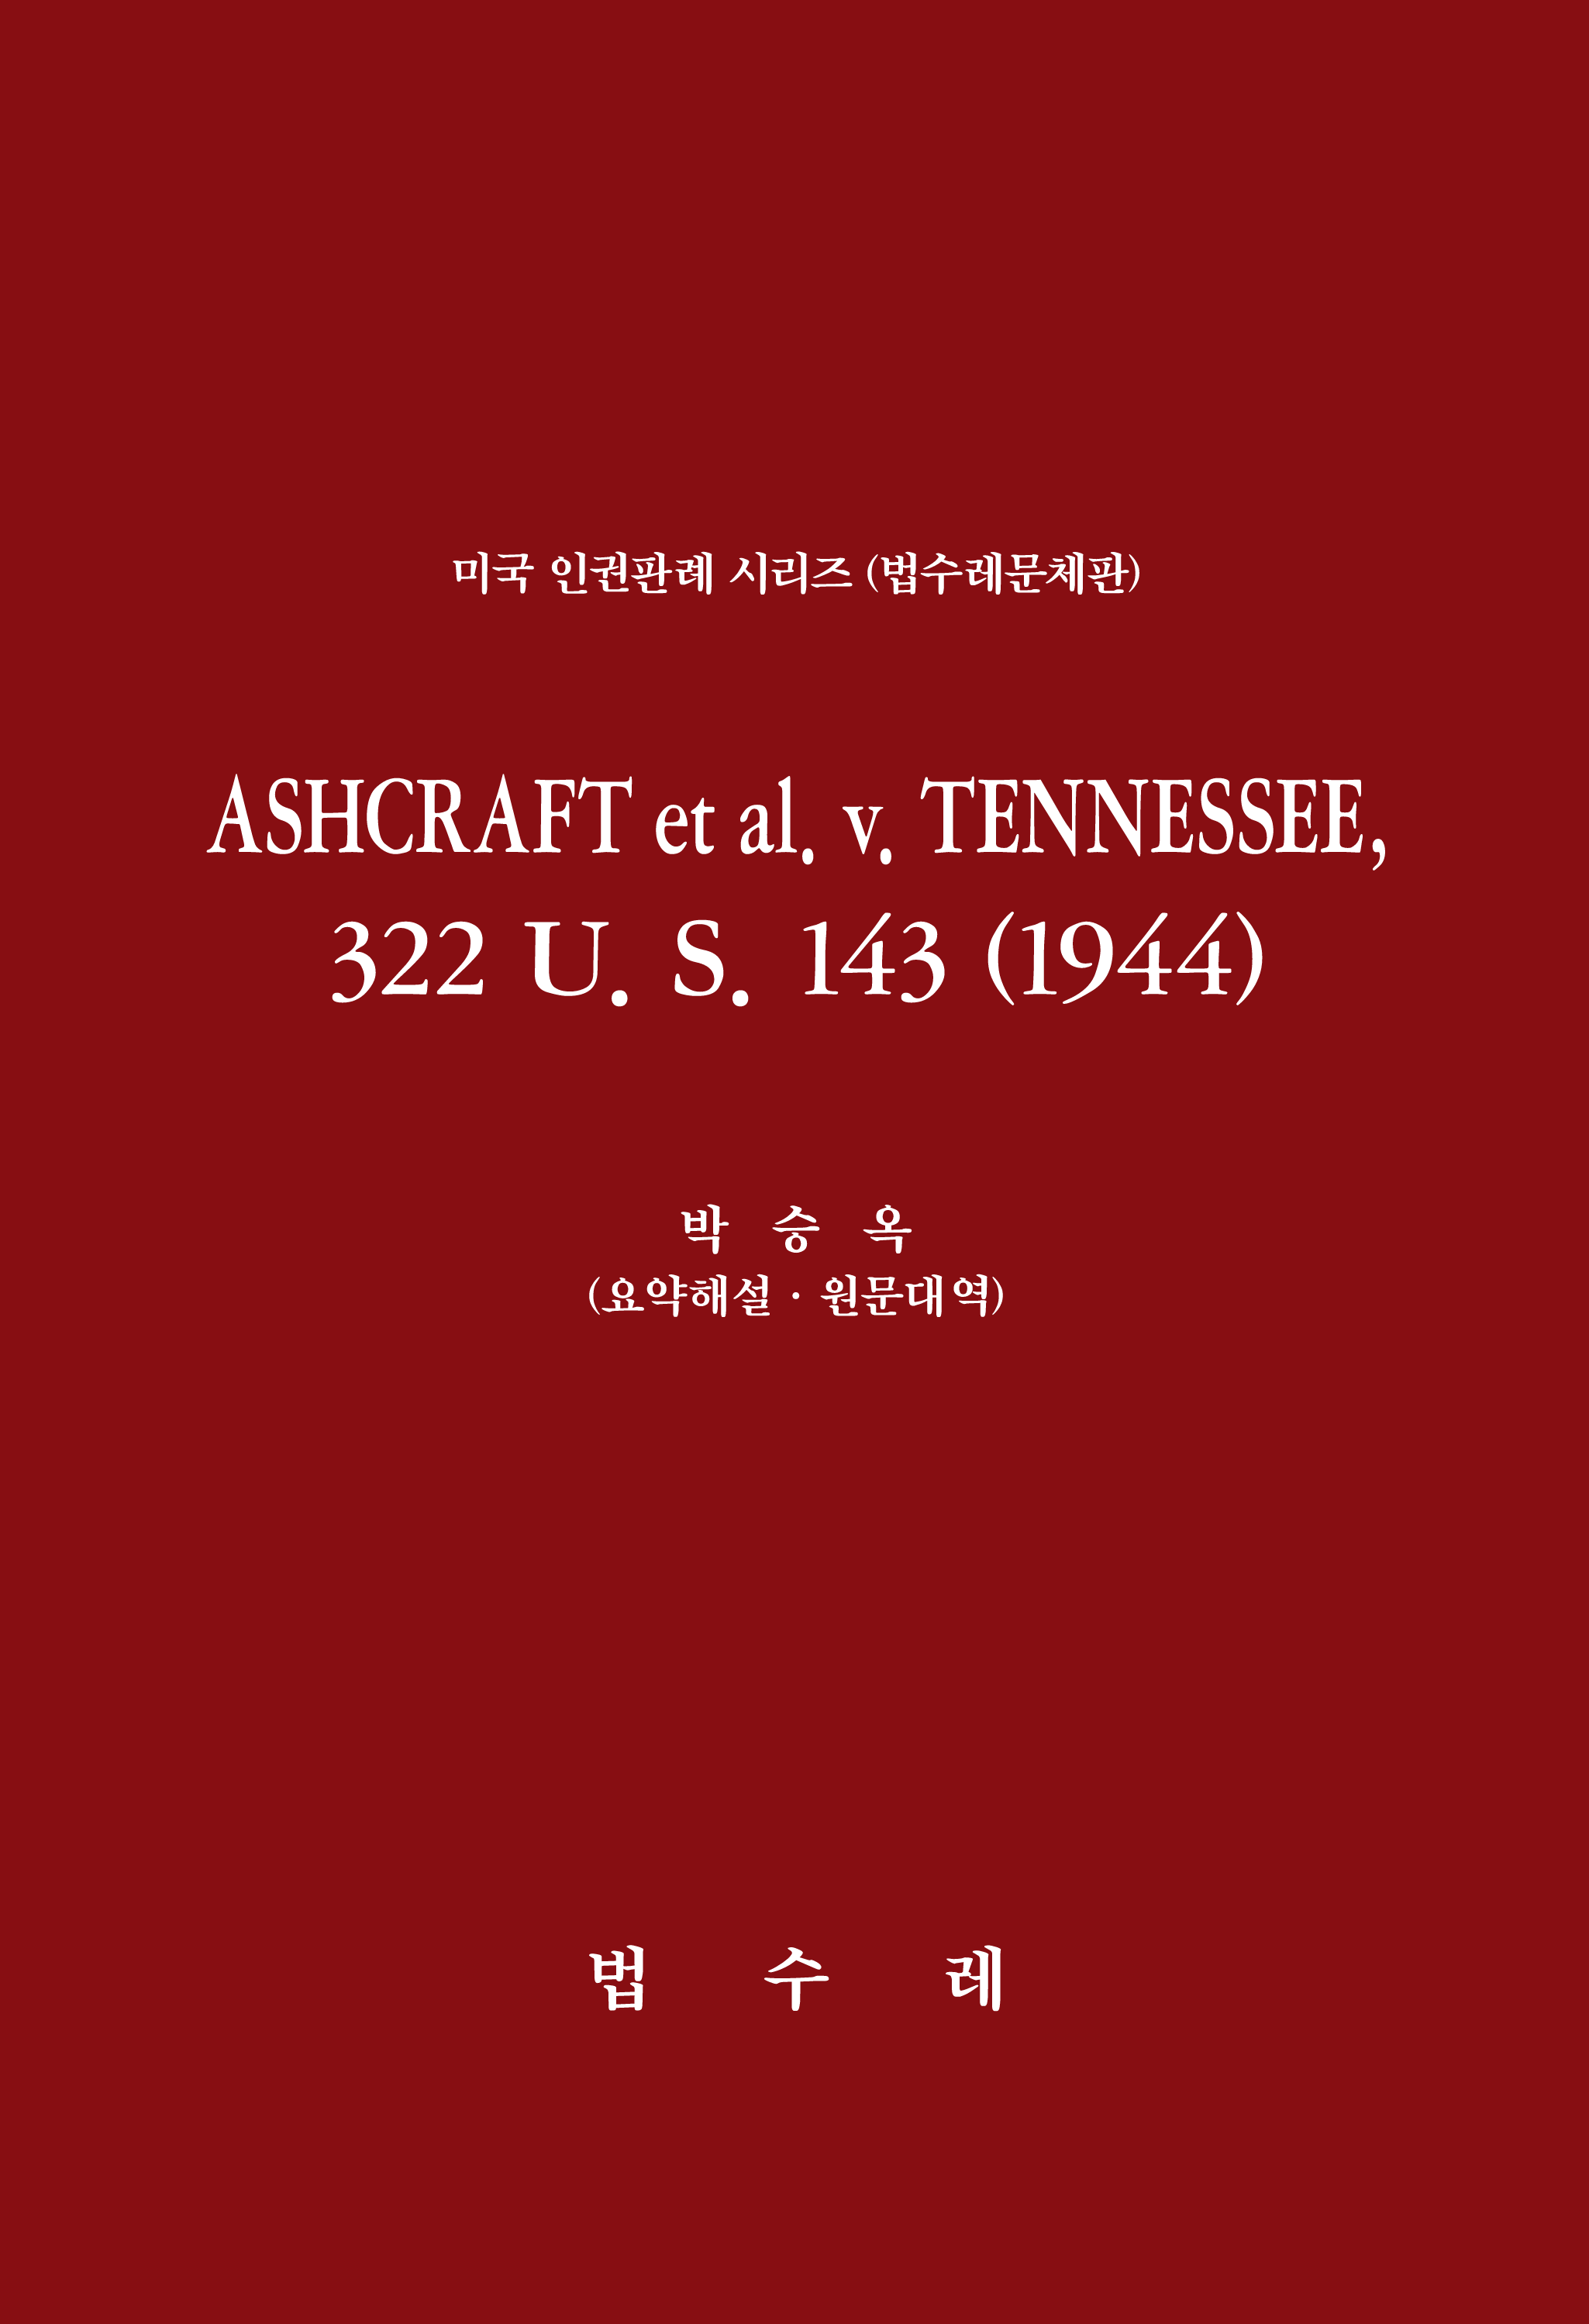 ASHCRAFT et al. v. TENNESSEE, 322 U. S. 143 (1944)